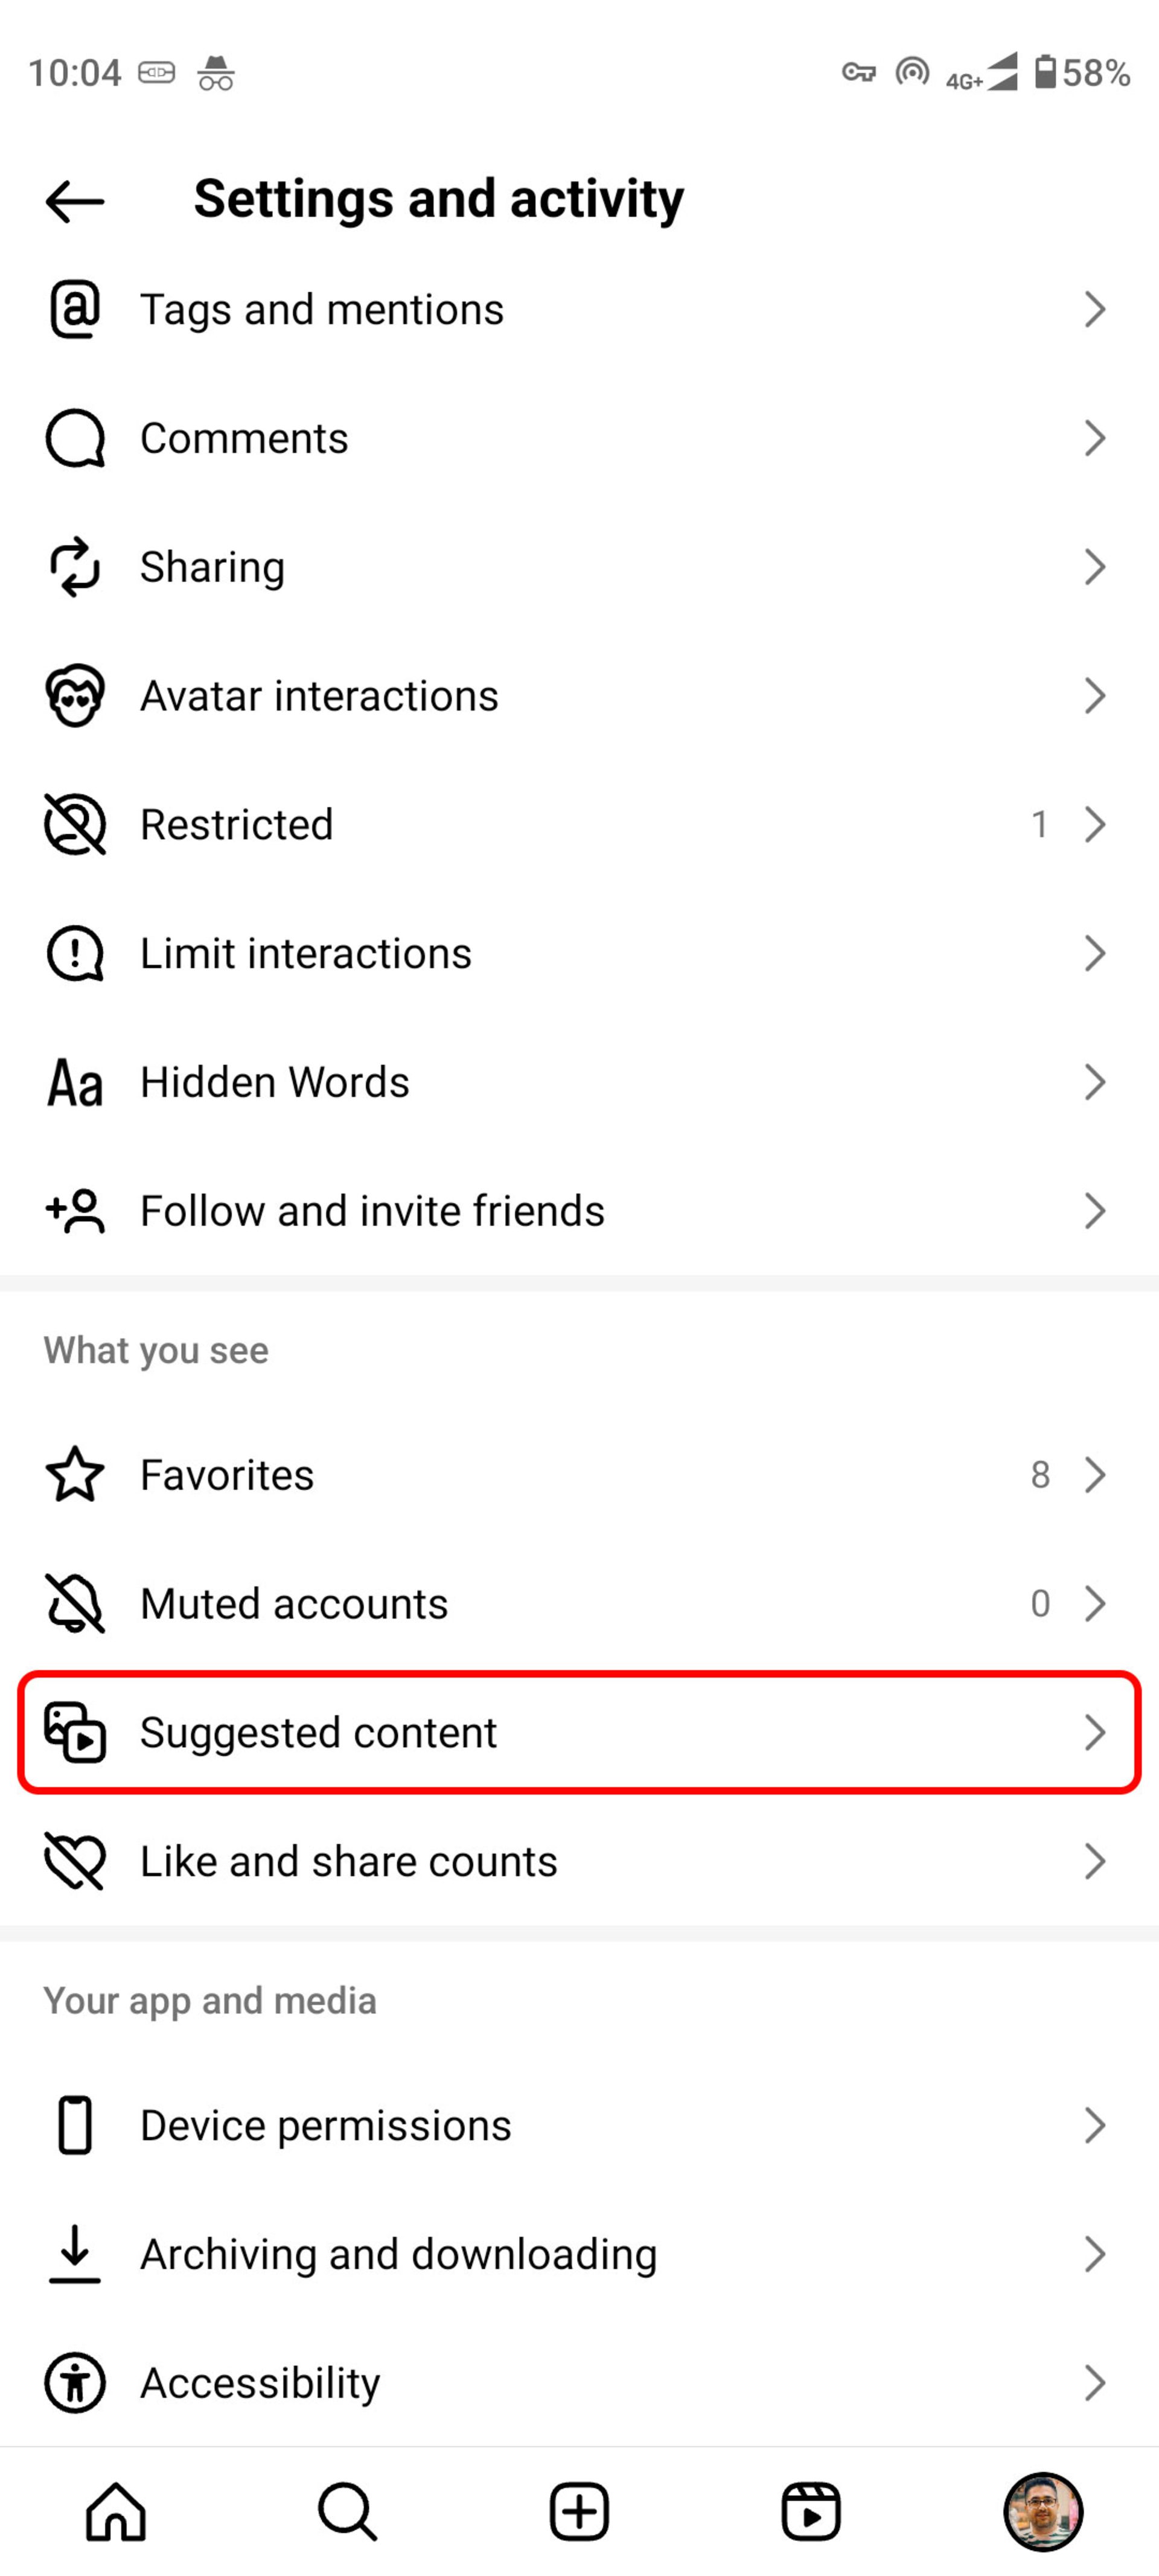 صفحه settings and activity اینستاگرام